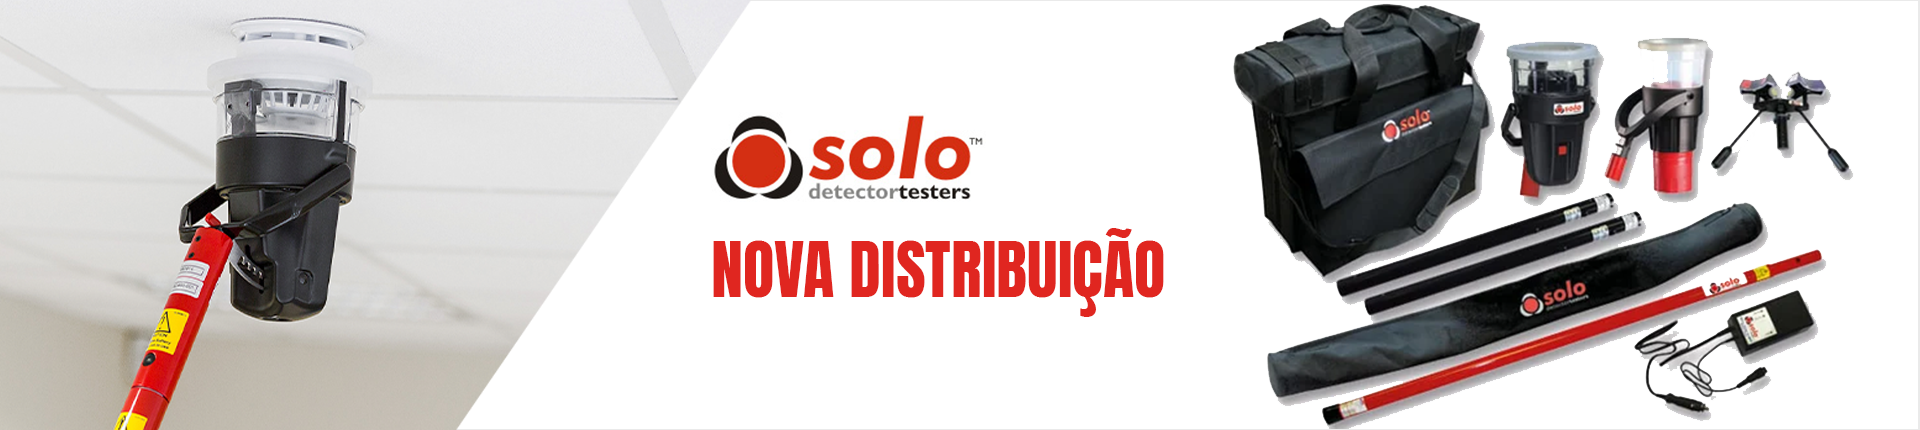 https://bo.contera.pt/fileuploads/Banners/BannersgrandesHomepage/Solo-nova-distribuicaaao-slide.png